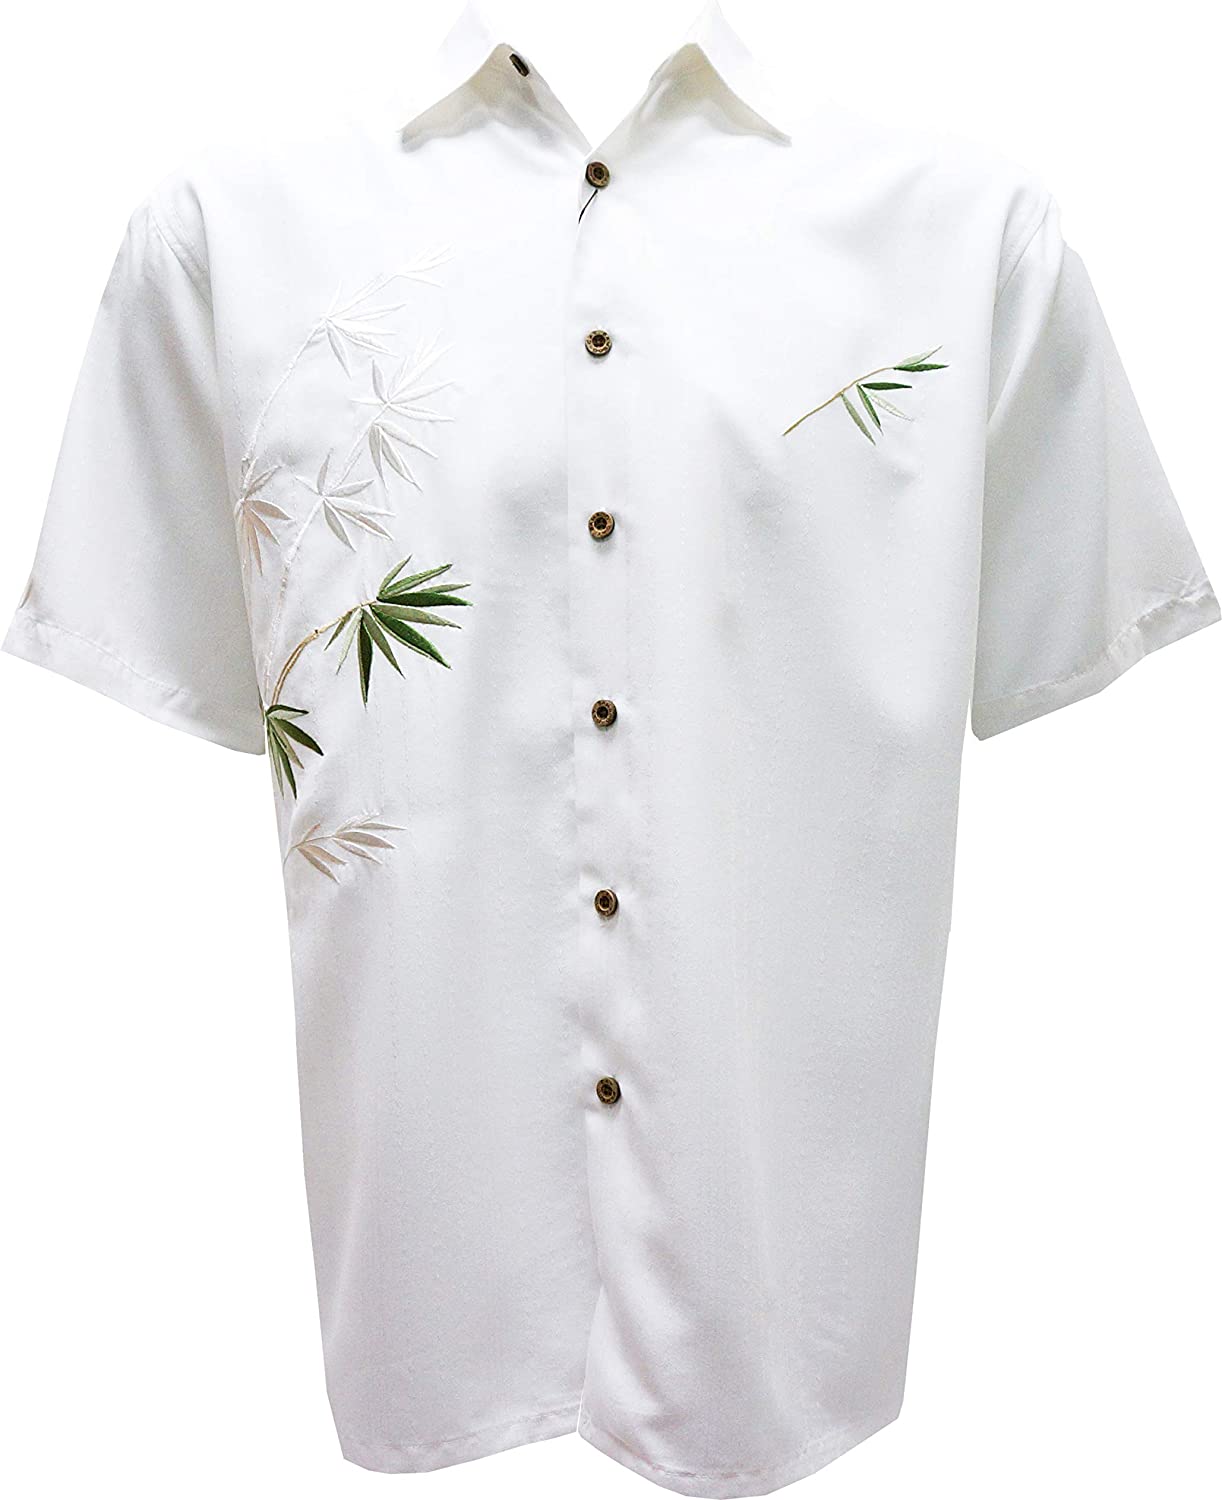 100% Bamboo Men's Long Sleeve Deep V-Neck – The Bamboo Shirt